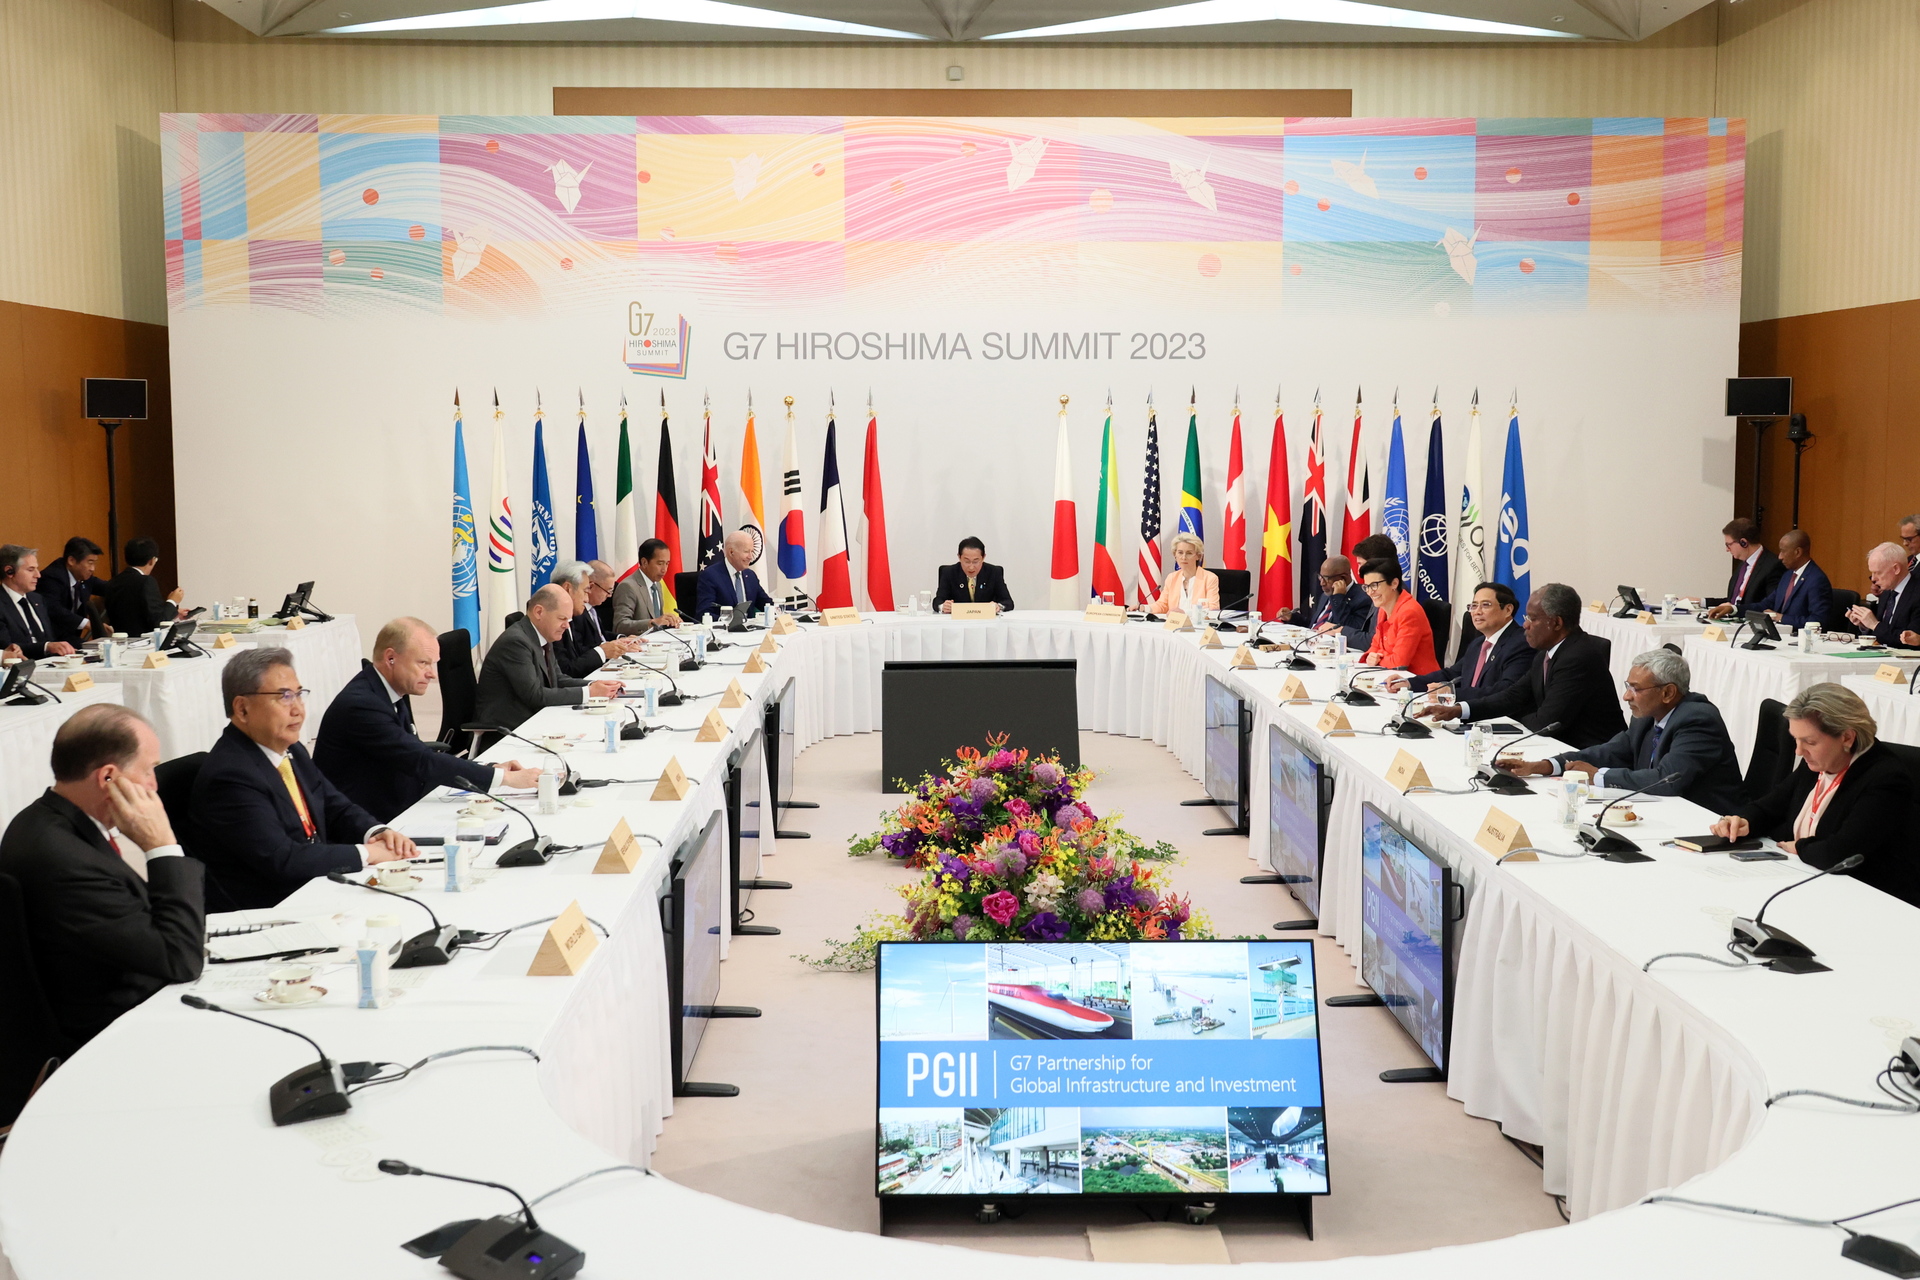 Key themes in the G7 summit declaration in Hiroshima